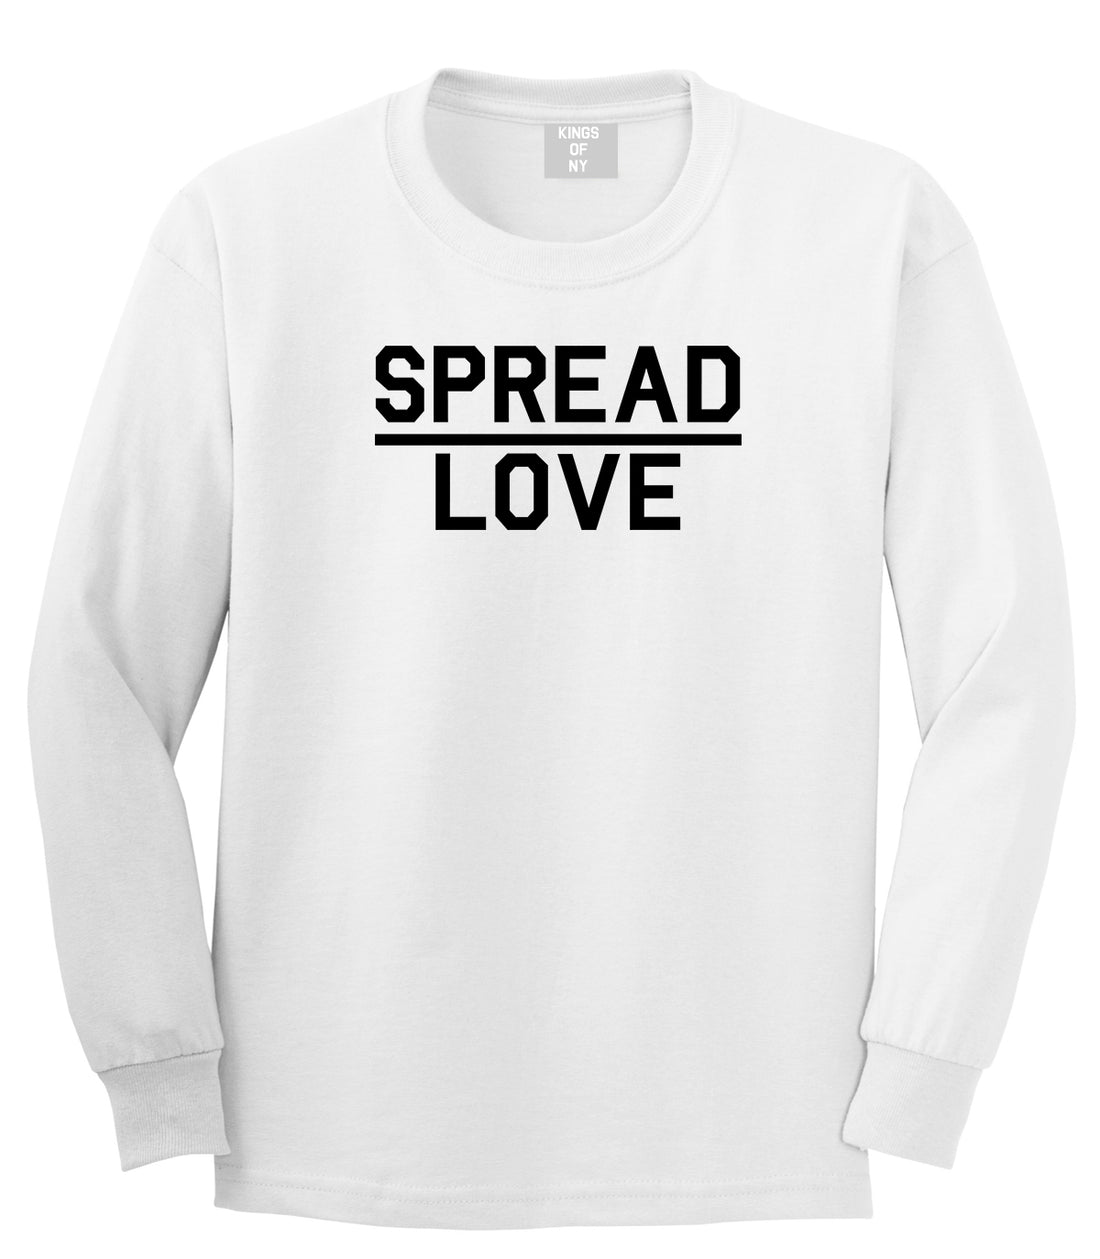 Spread Love Brooklyn Long Sleeve T-Shirt in White